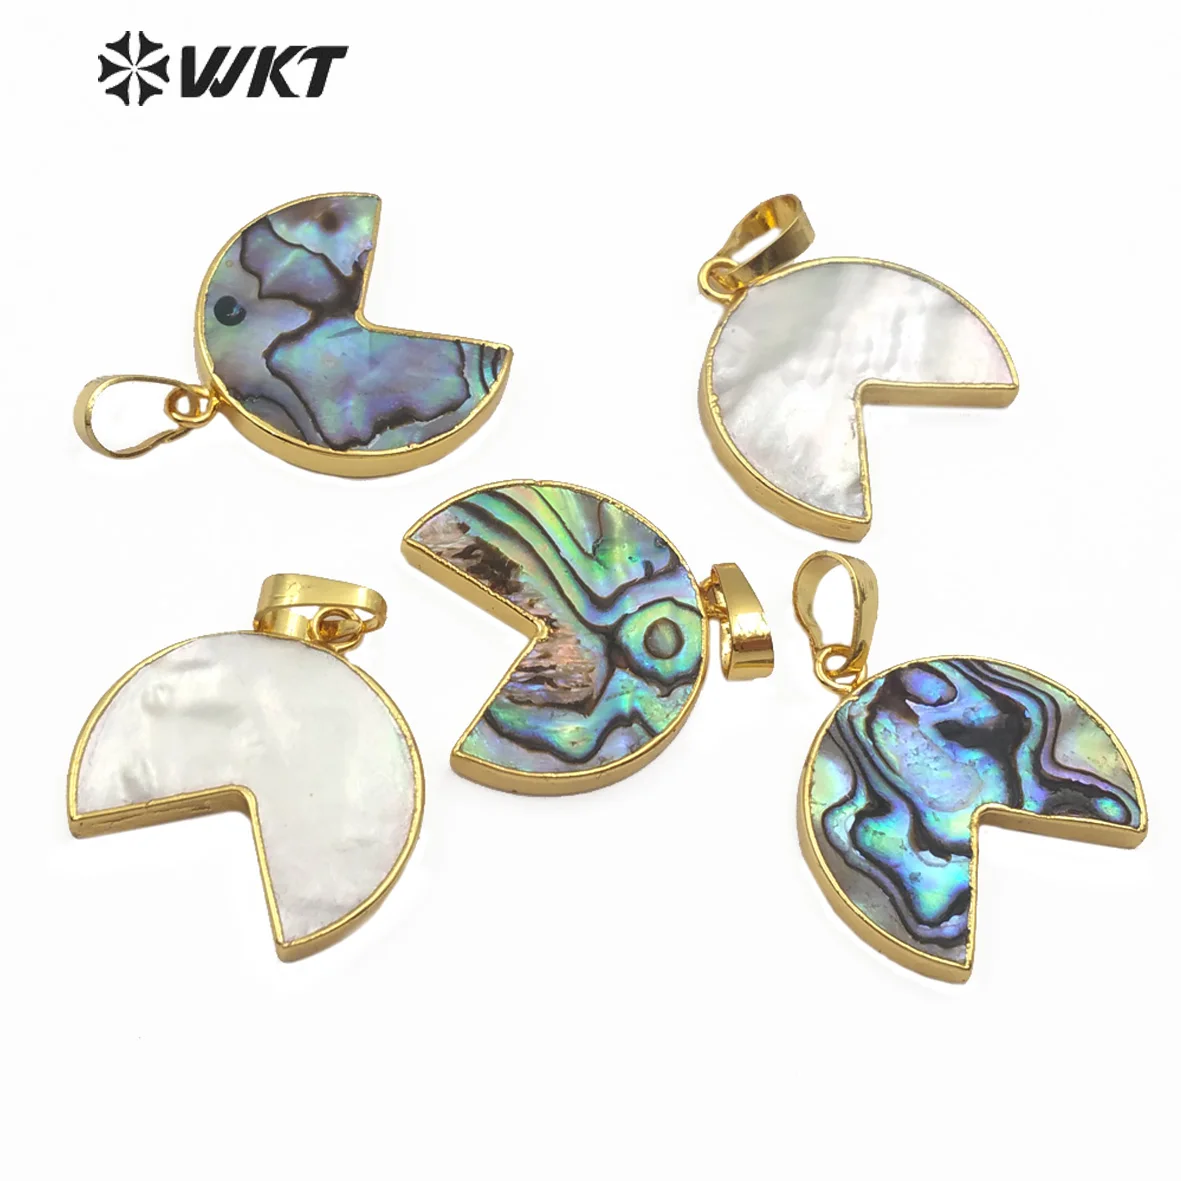 

WT-JP180 WKT Natural Abalone Shell Pendant Horn Shape Abalone Shell Gold Electroplated Pendant Women Fashion Pendant Jewelry